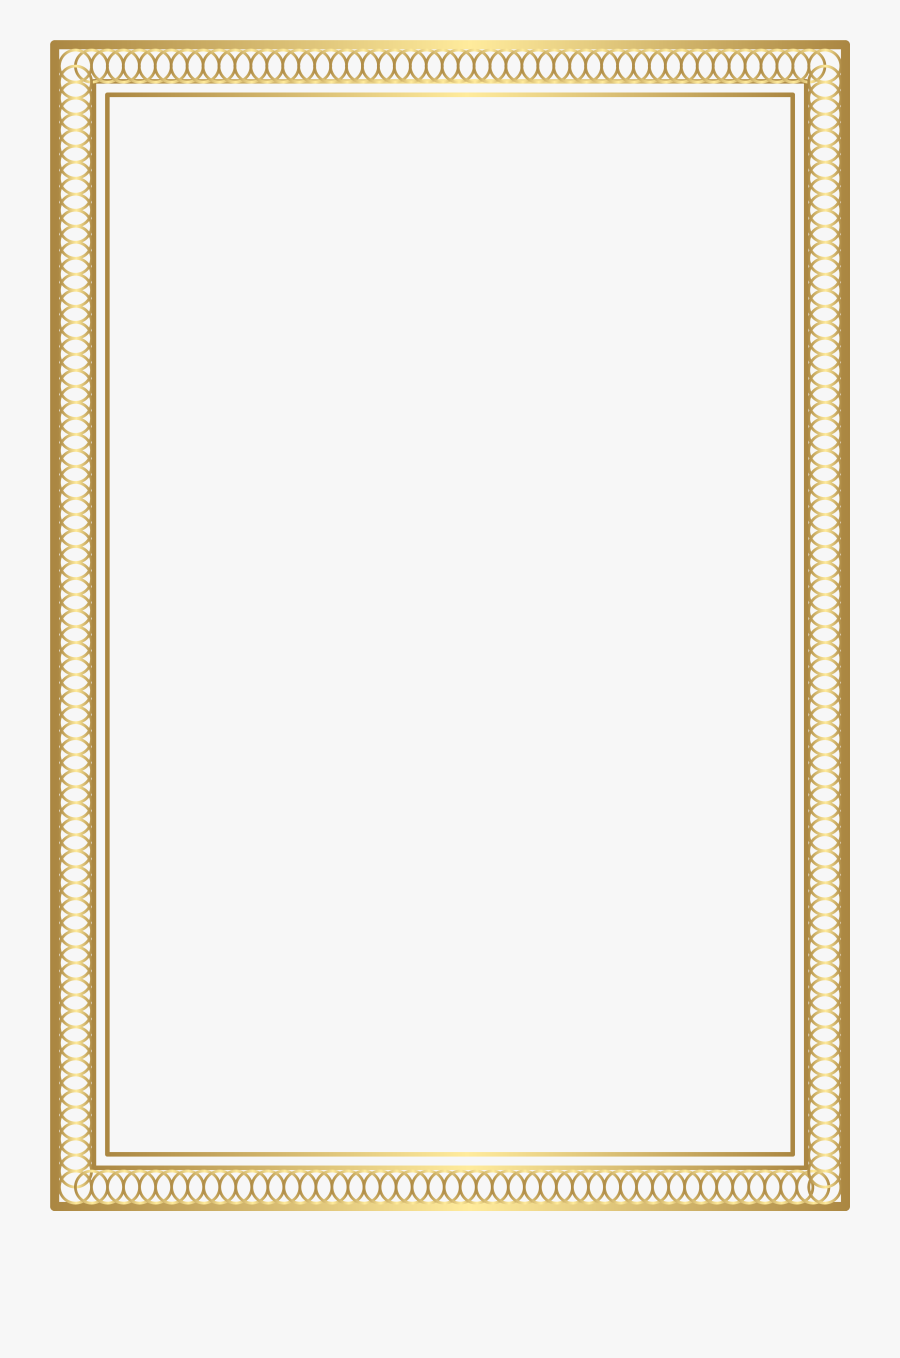 Gold Png Border - Pattern, Transparent Clipart